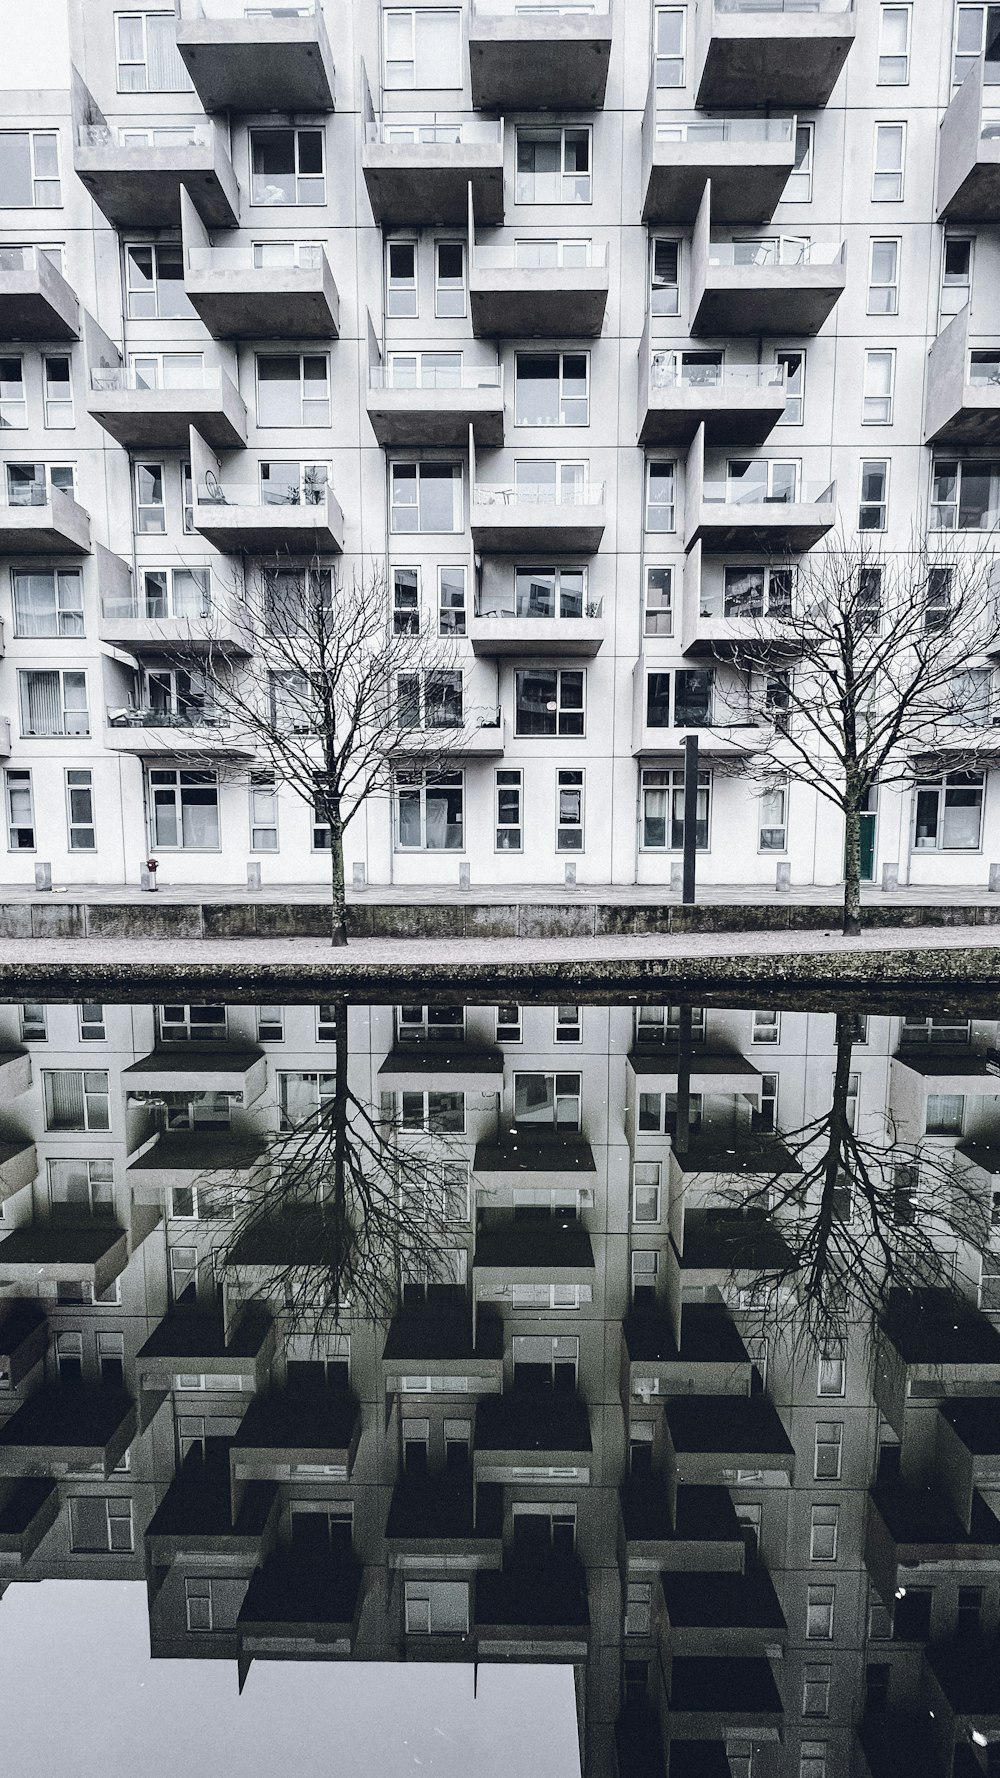 un reflejo de un edificio en un charco de agua